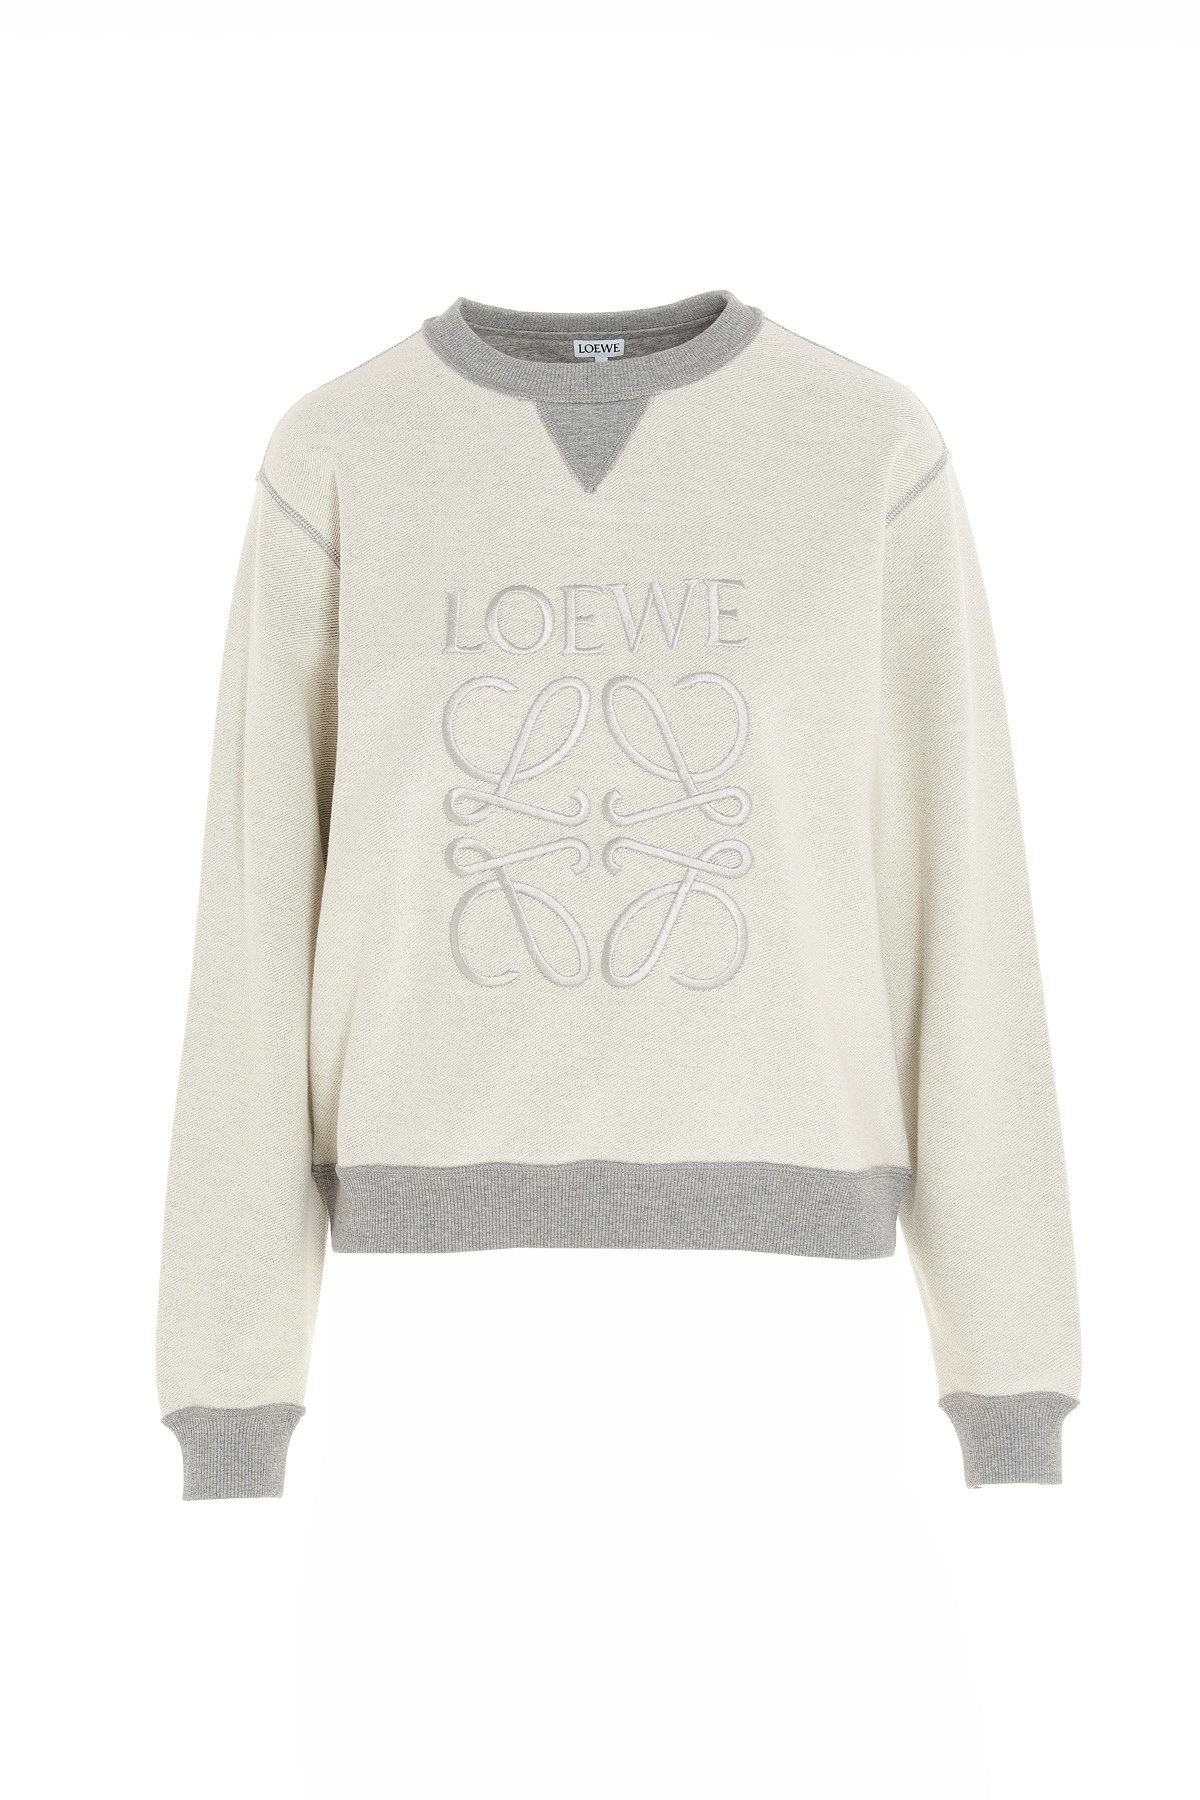 LOEWE 'Anagram’ Sweatshirt